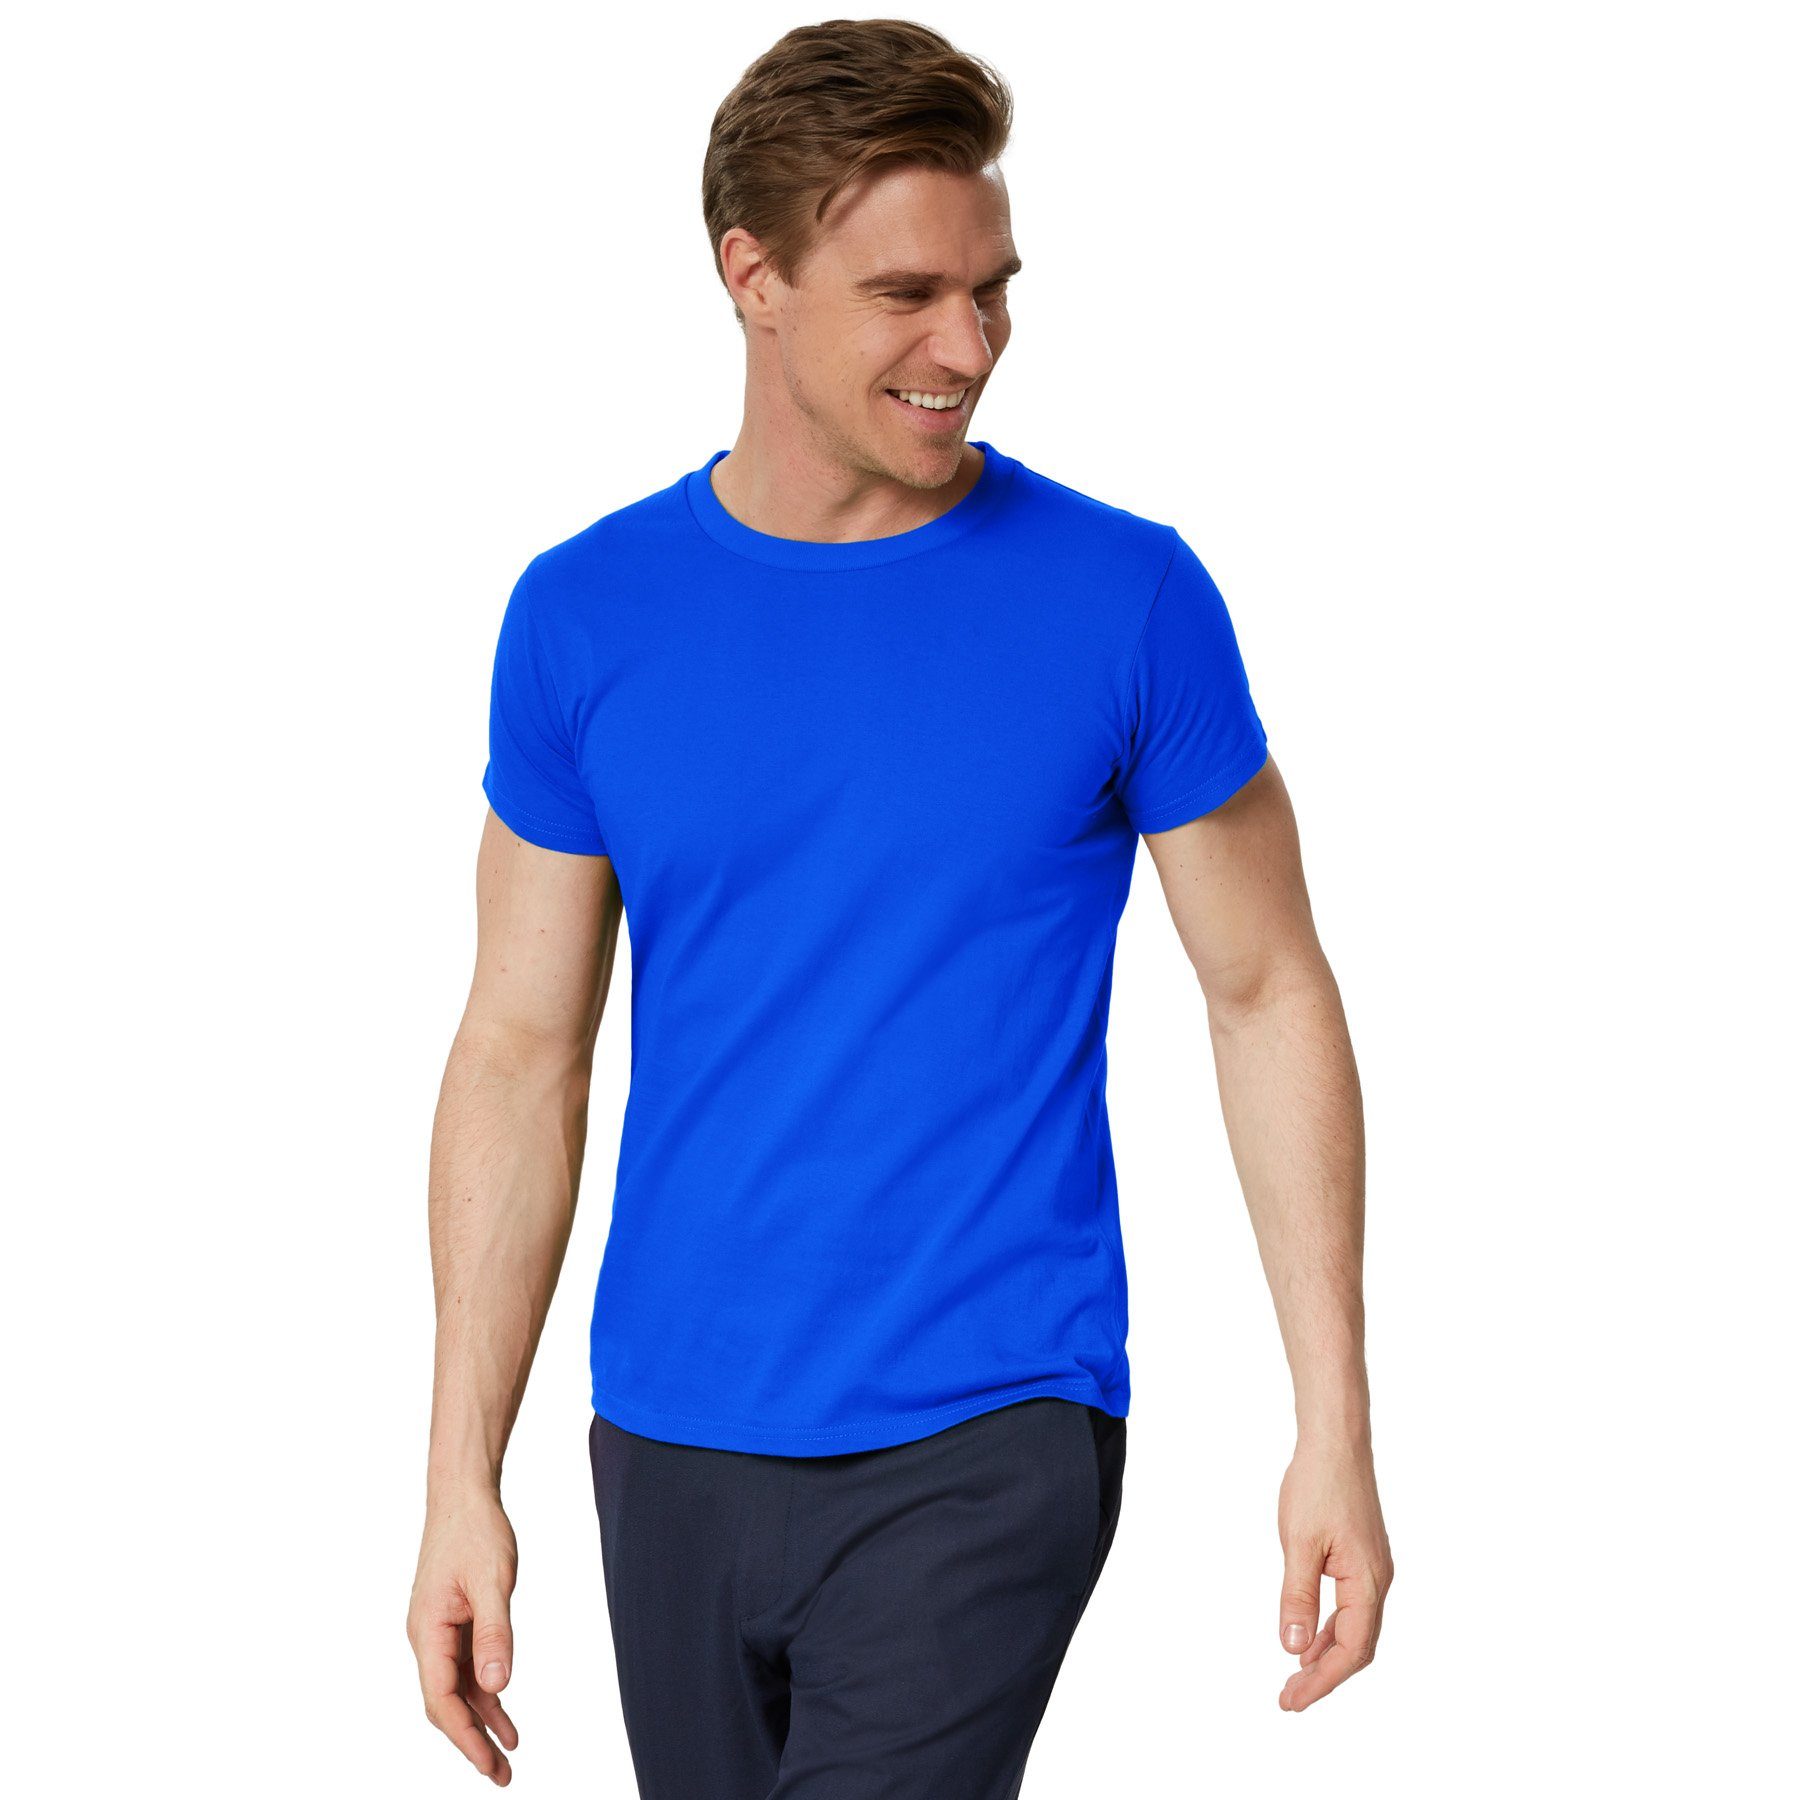 dressforfun T-Shirt blau Männer T-Shirt Rundhals